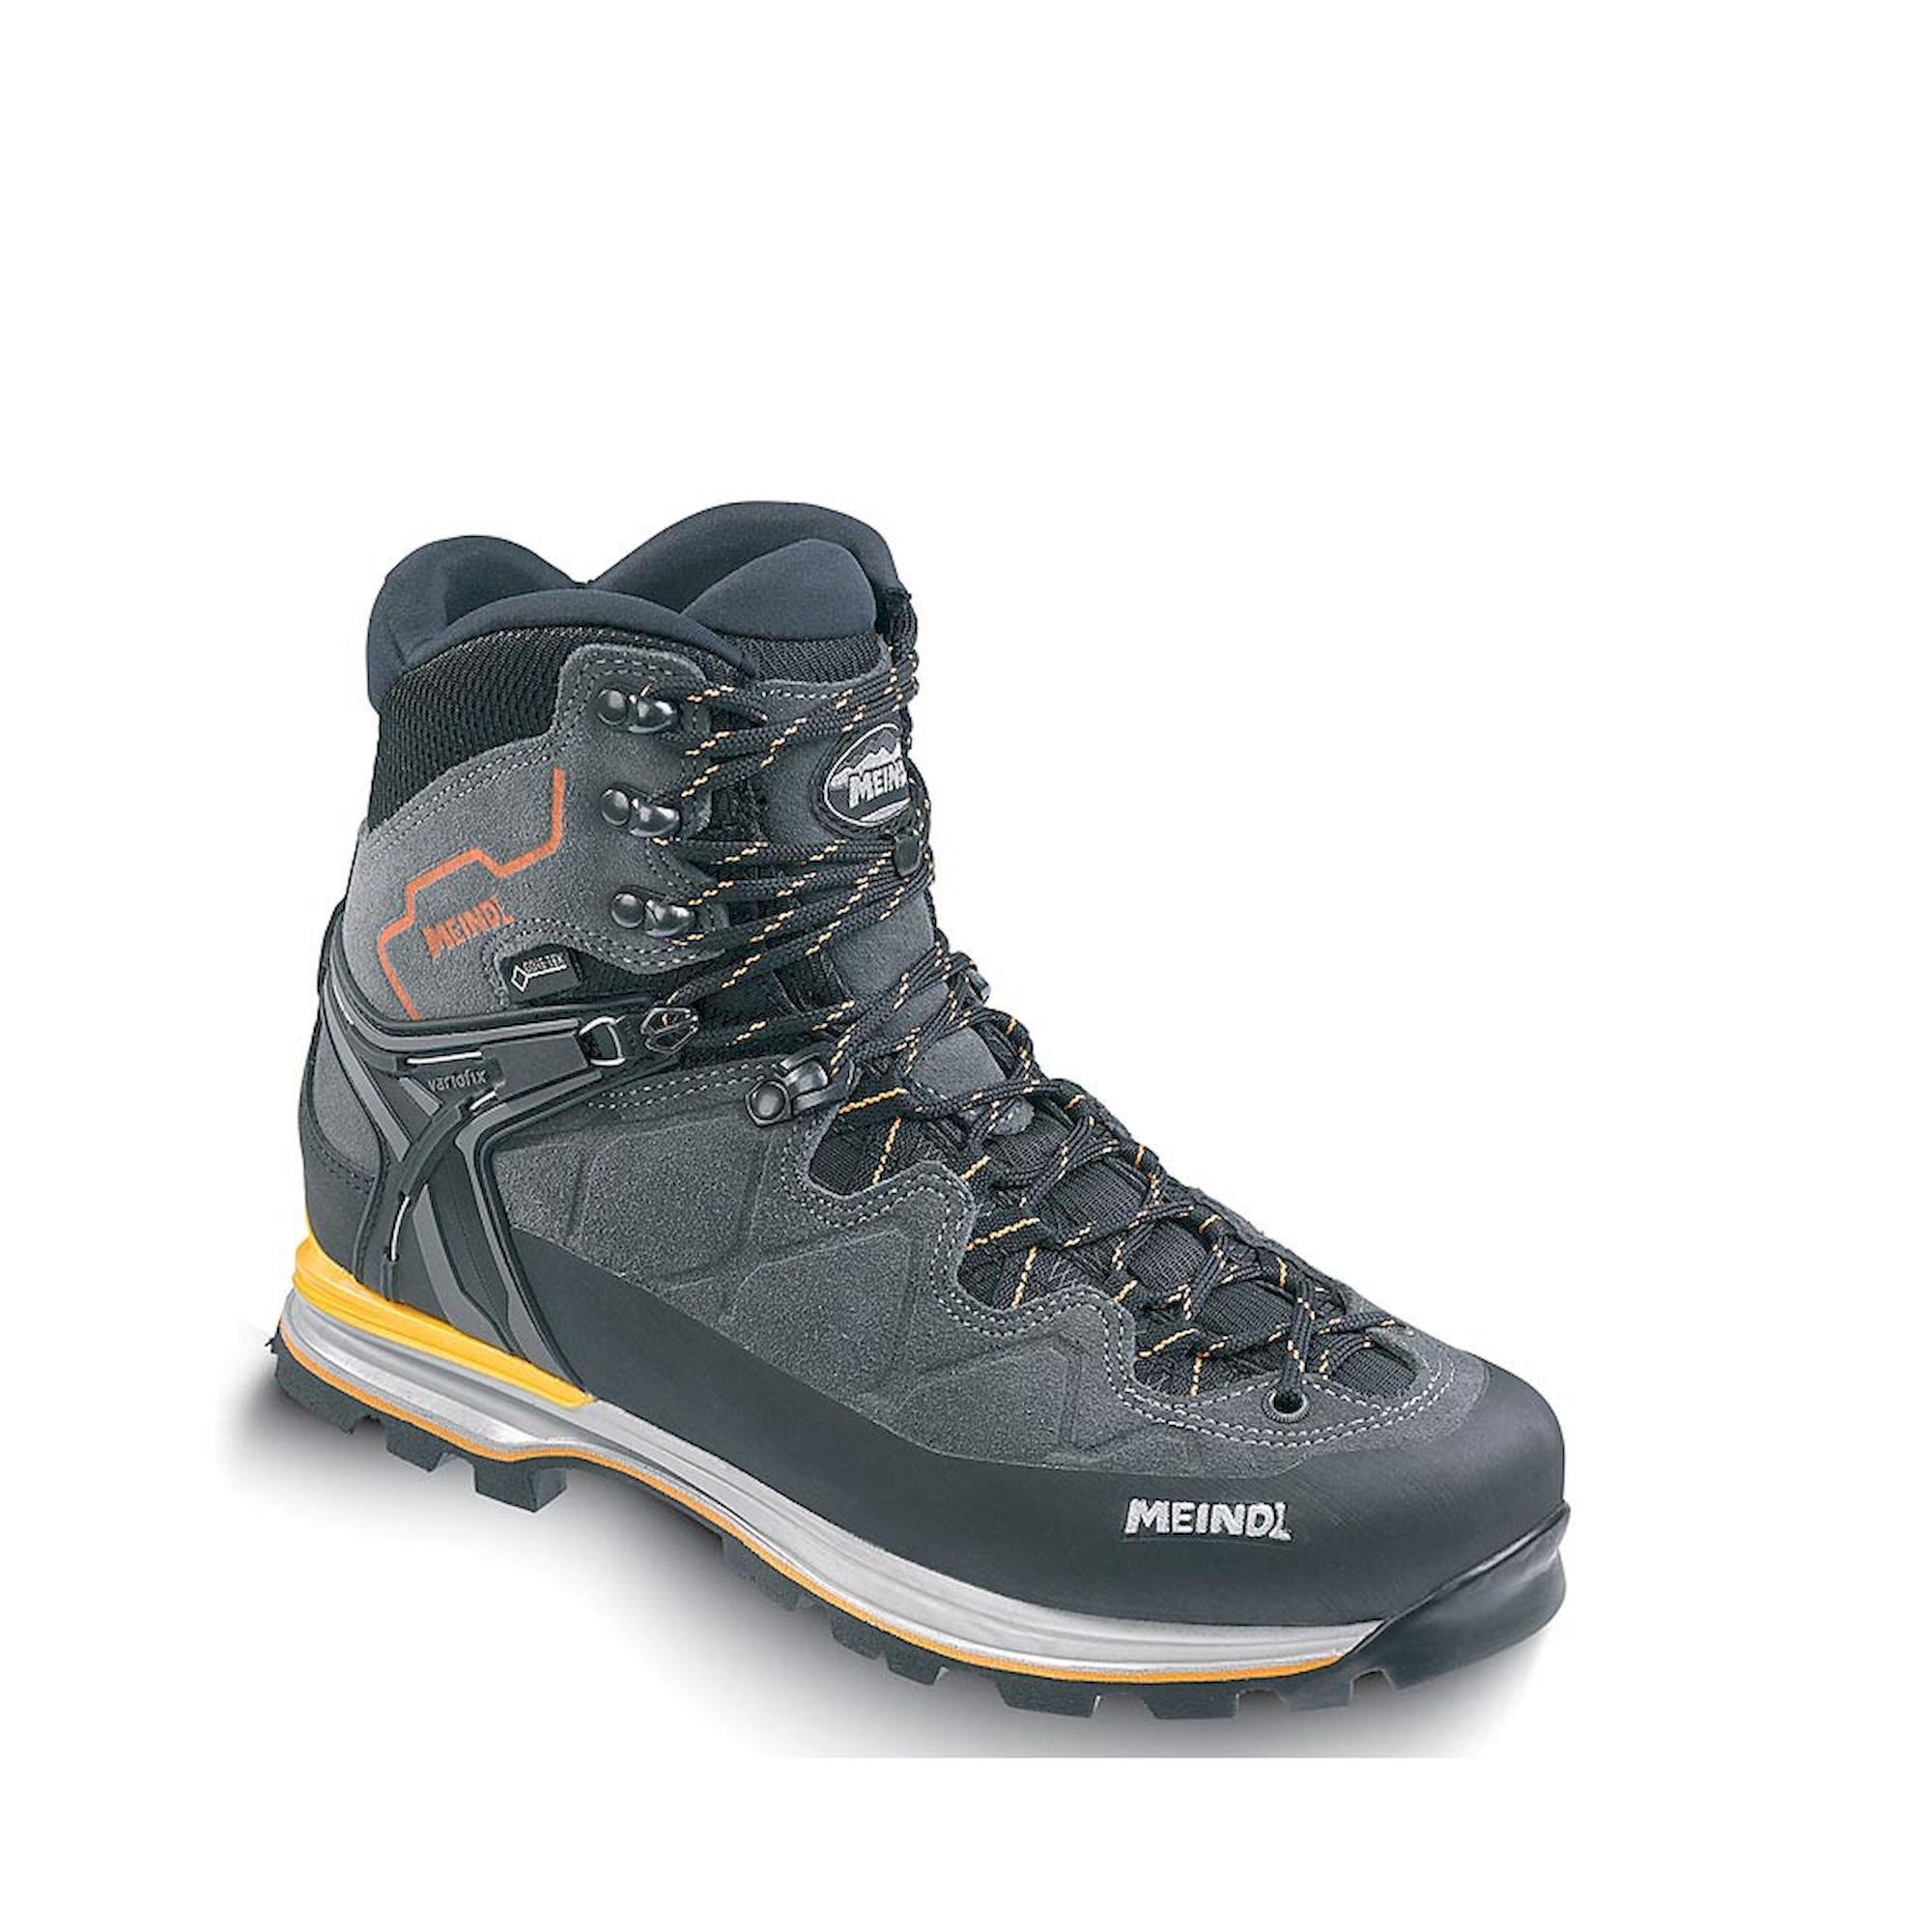 Meindl Litepeak Pro GTX  - Hiking boots - Men's